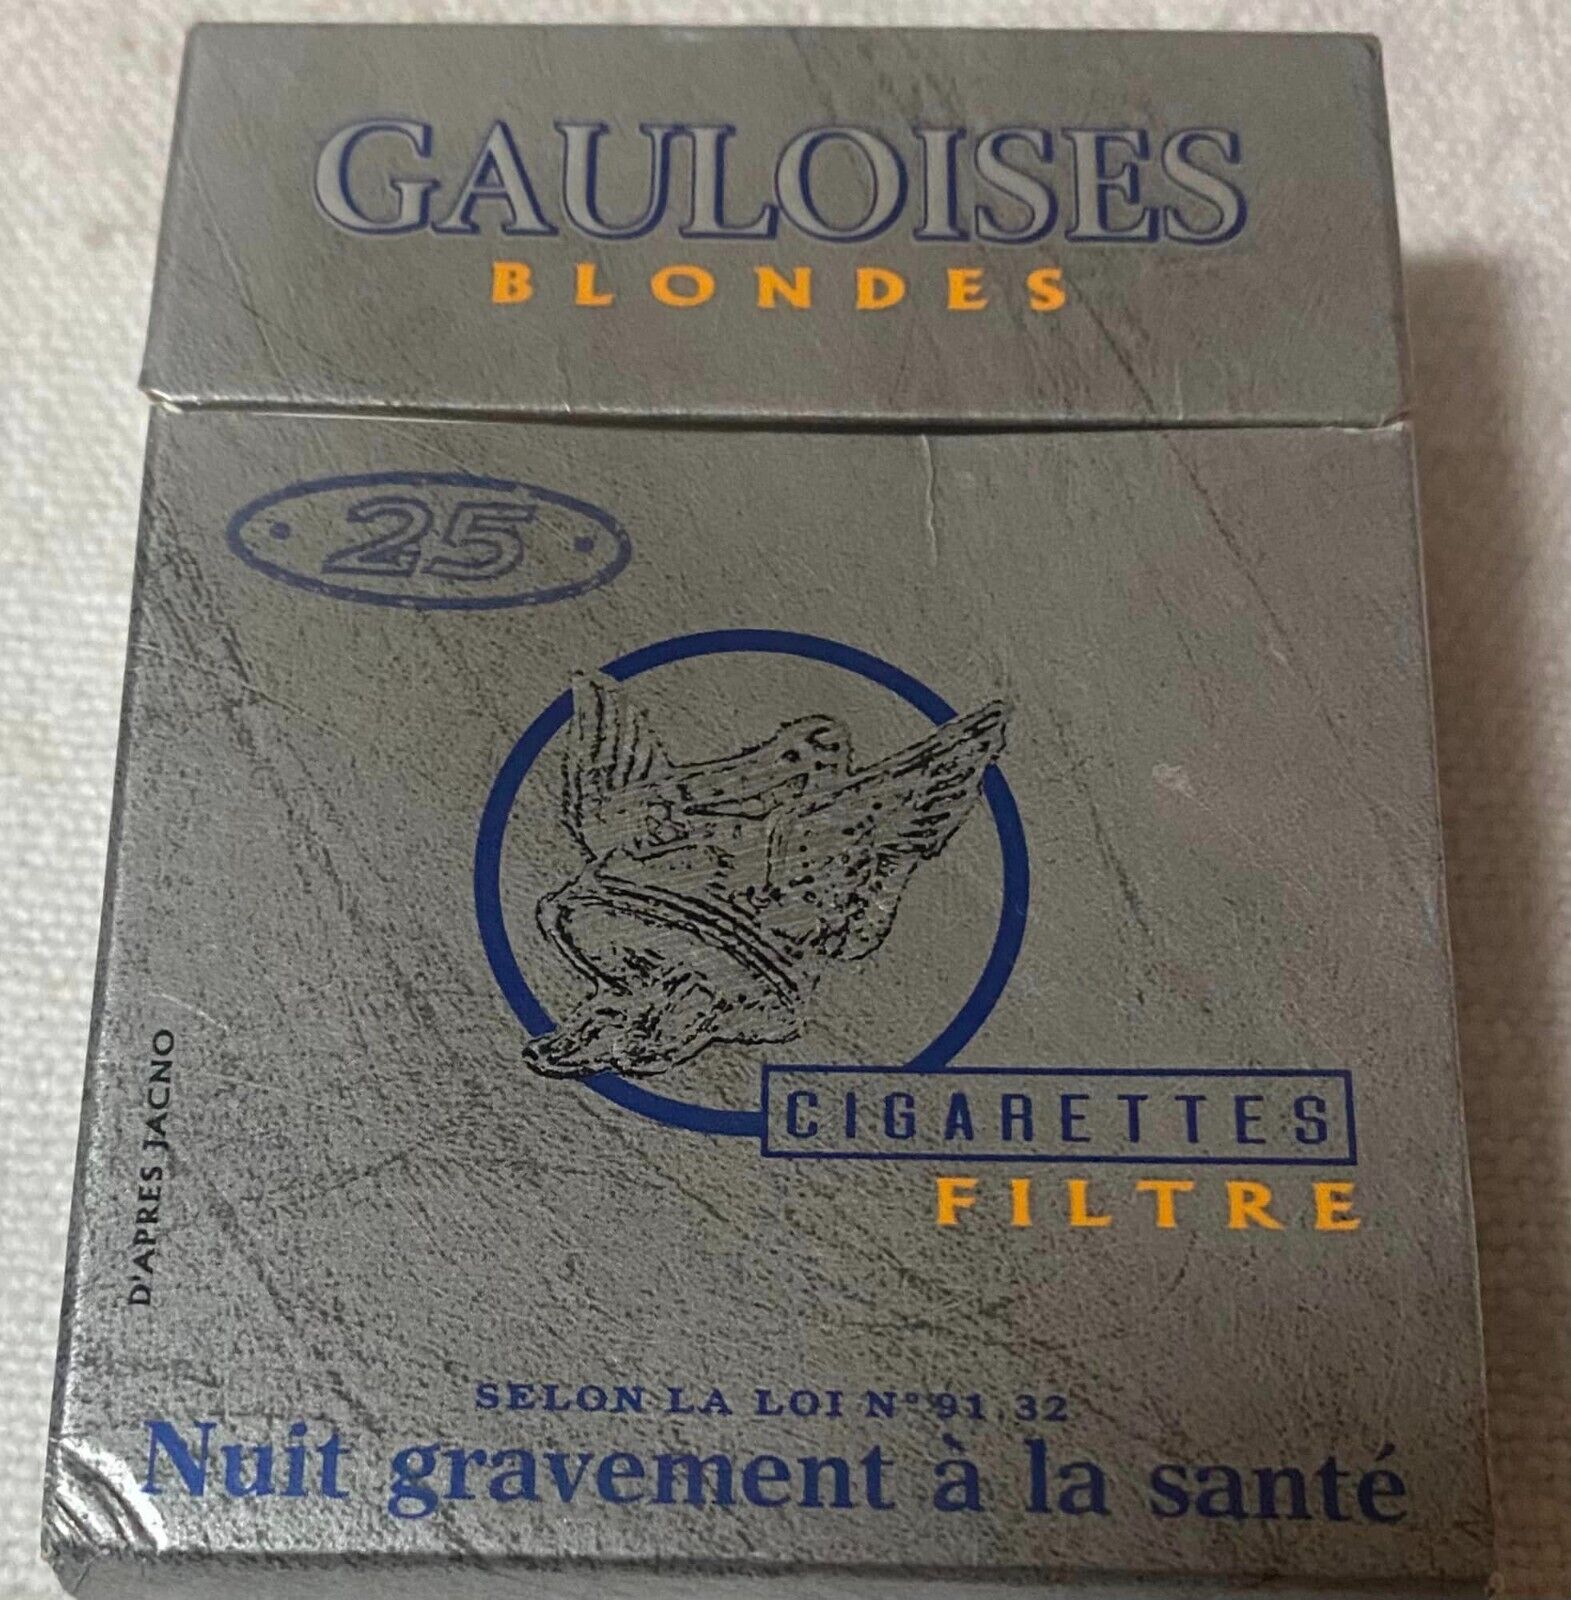 Vintage Gauloises Blondes 25 Filter Cigarette Cigarettes Cigarette Paper Box